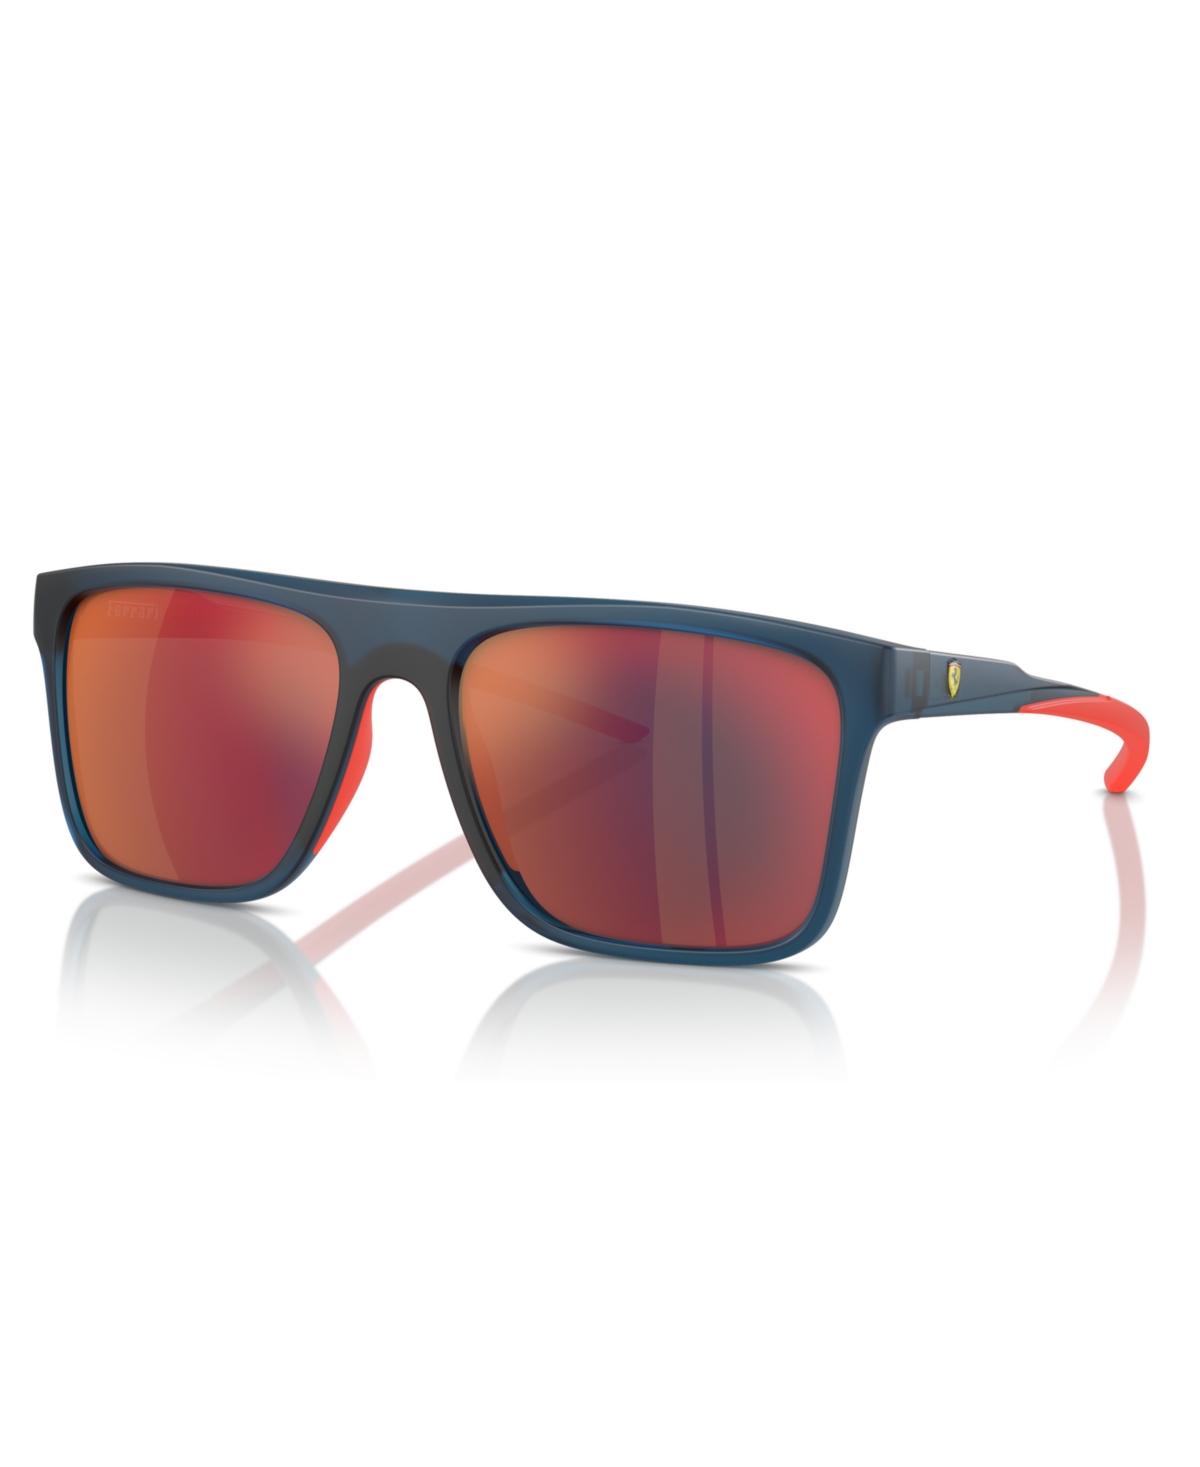 Scuderia Ferrari Men's Sunglasses, FZ6006 - Opal Blue